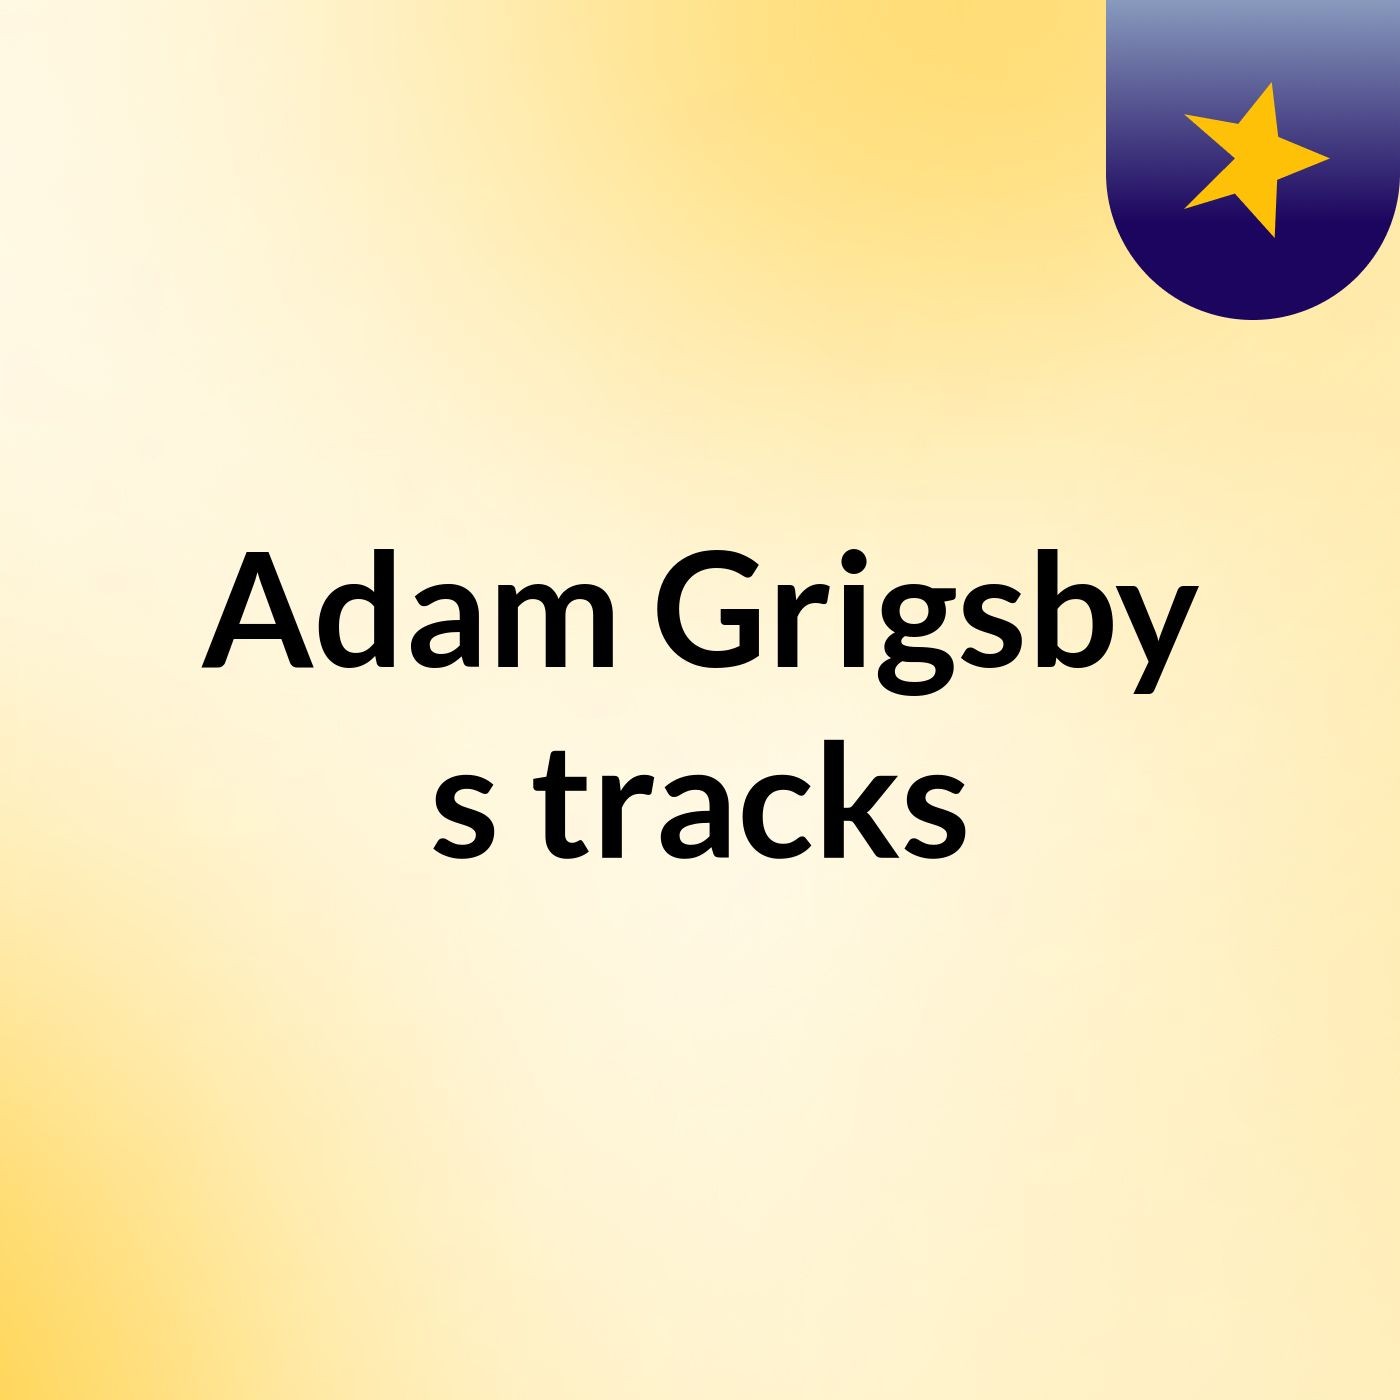 Adam Grigsby's tracks